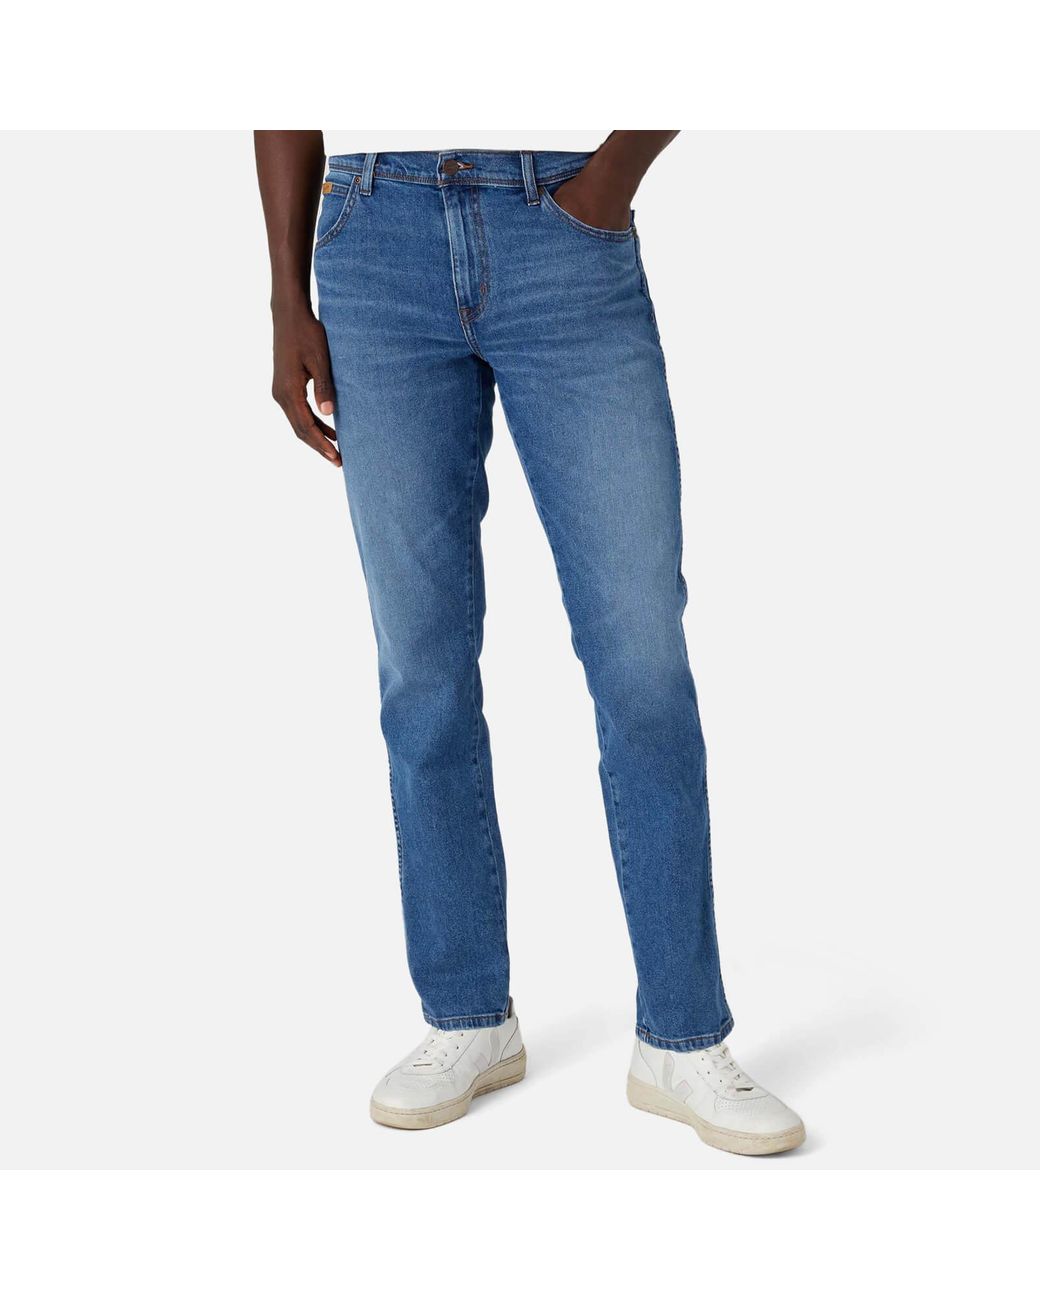 Wrangler Texas Slim Fit Jeans, Blue at John Lewis & Partners